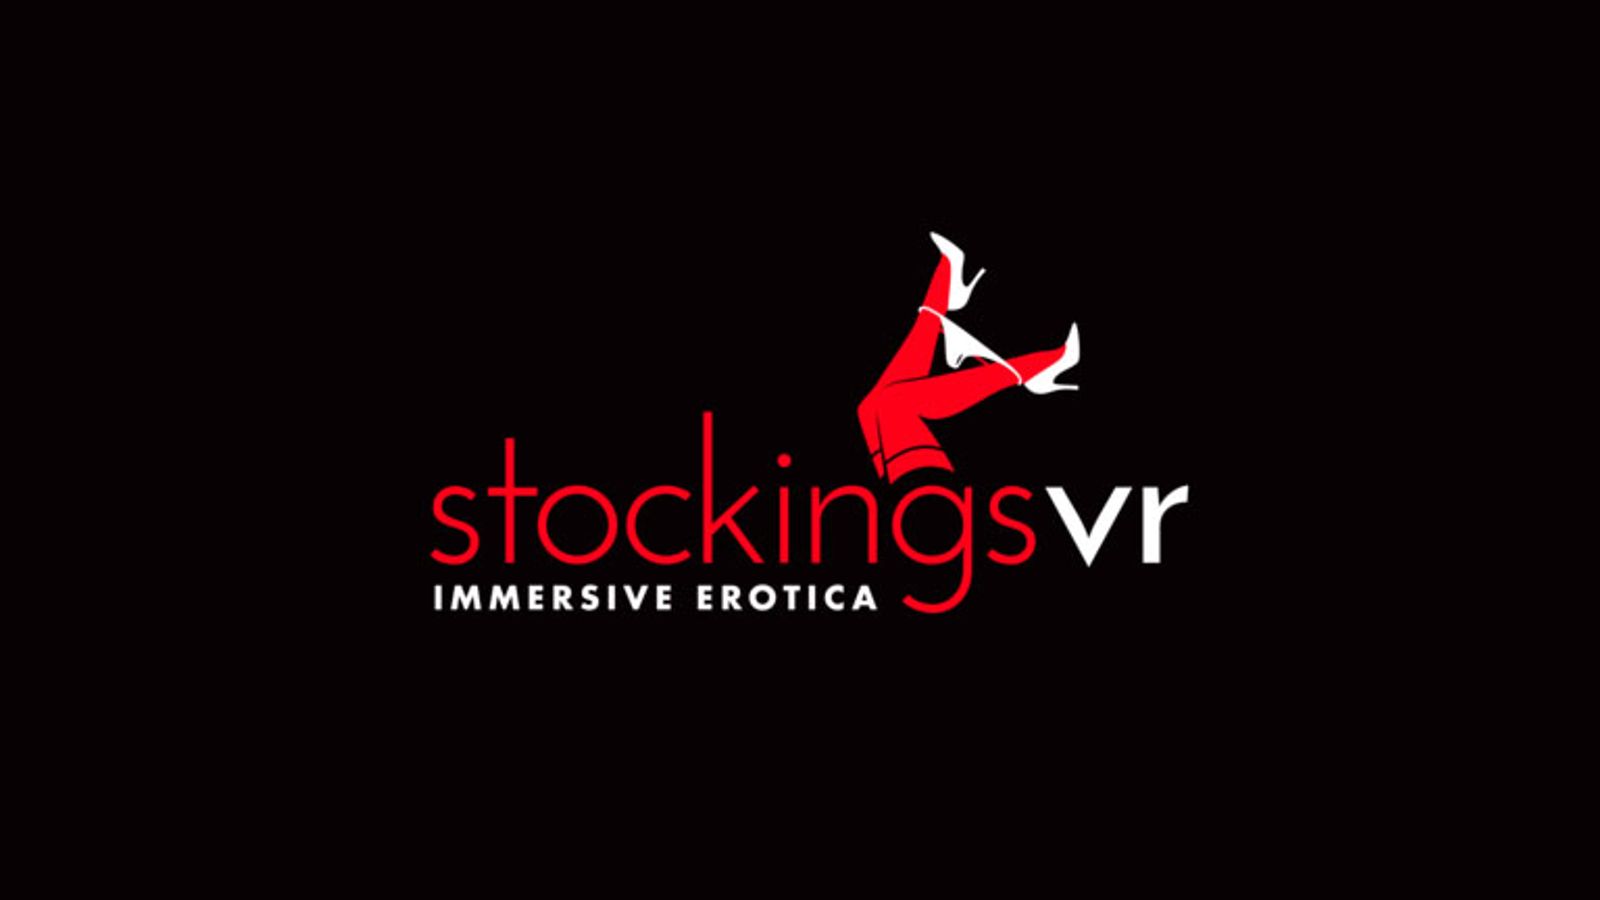 Lingerie-Centered StockingsVR.com Launches